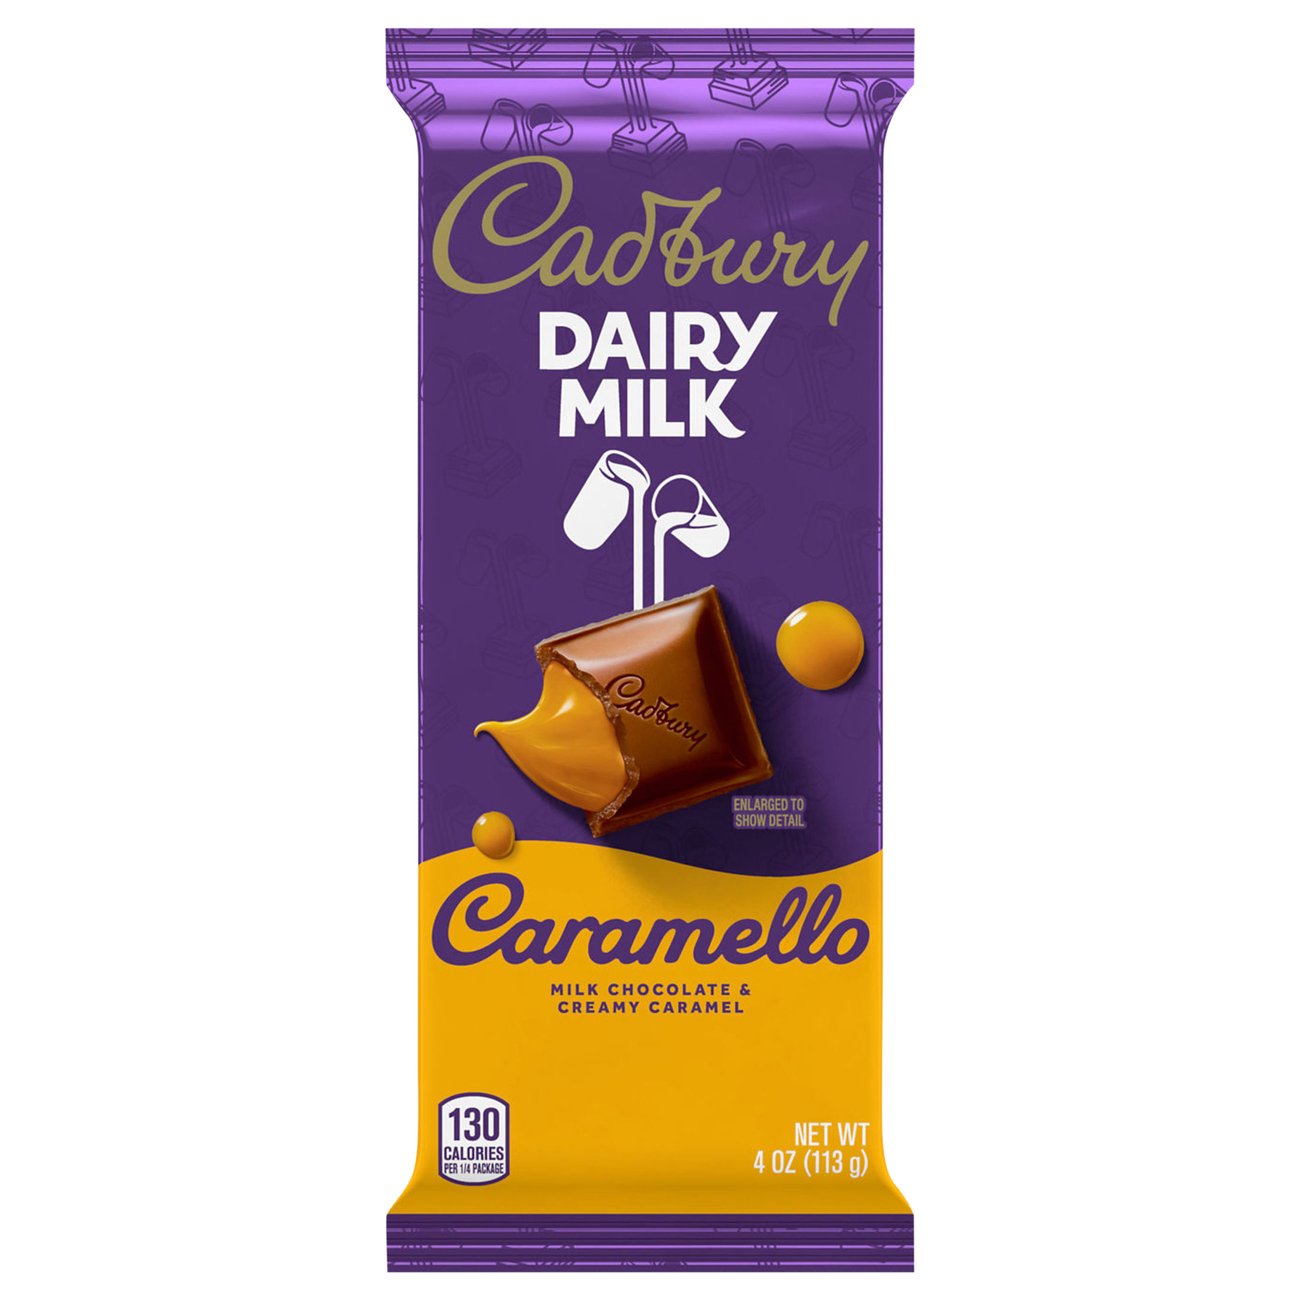 Premium Milk Chocolate Candy Bar with Caramel